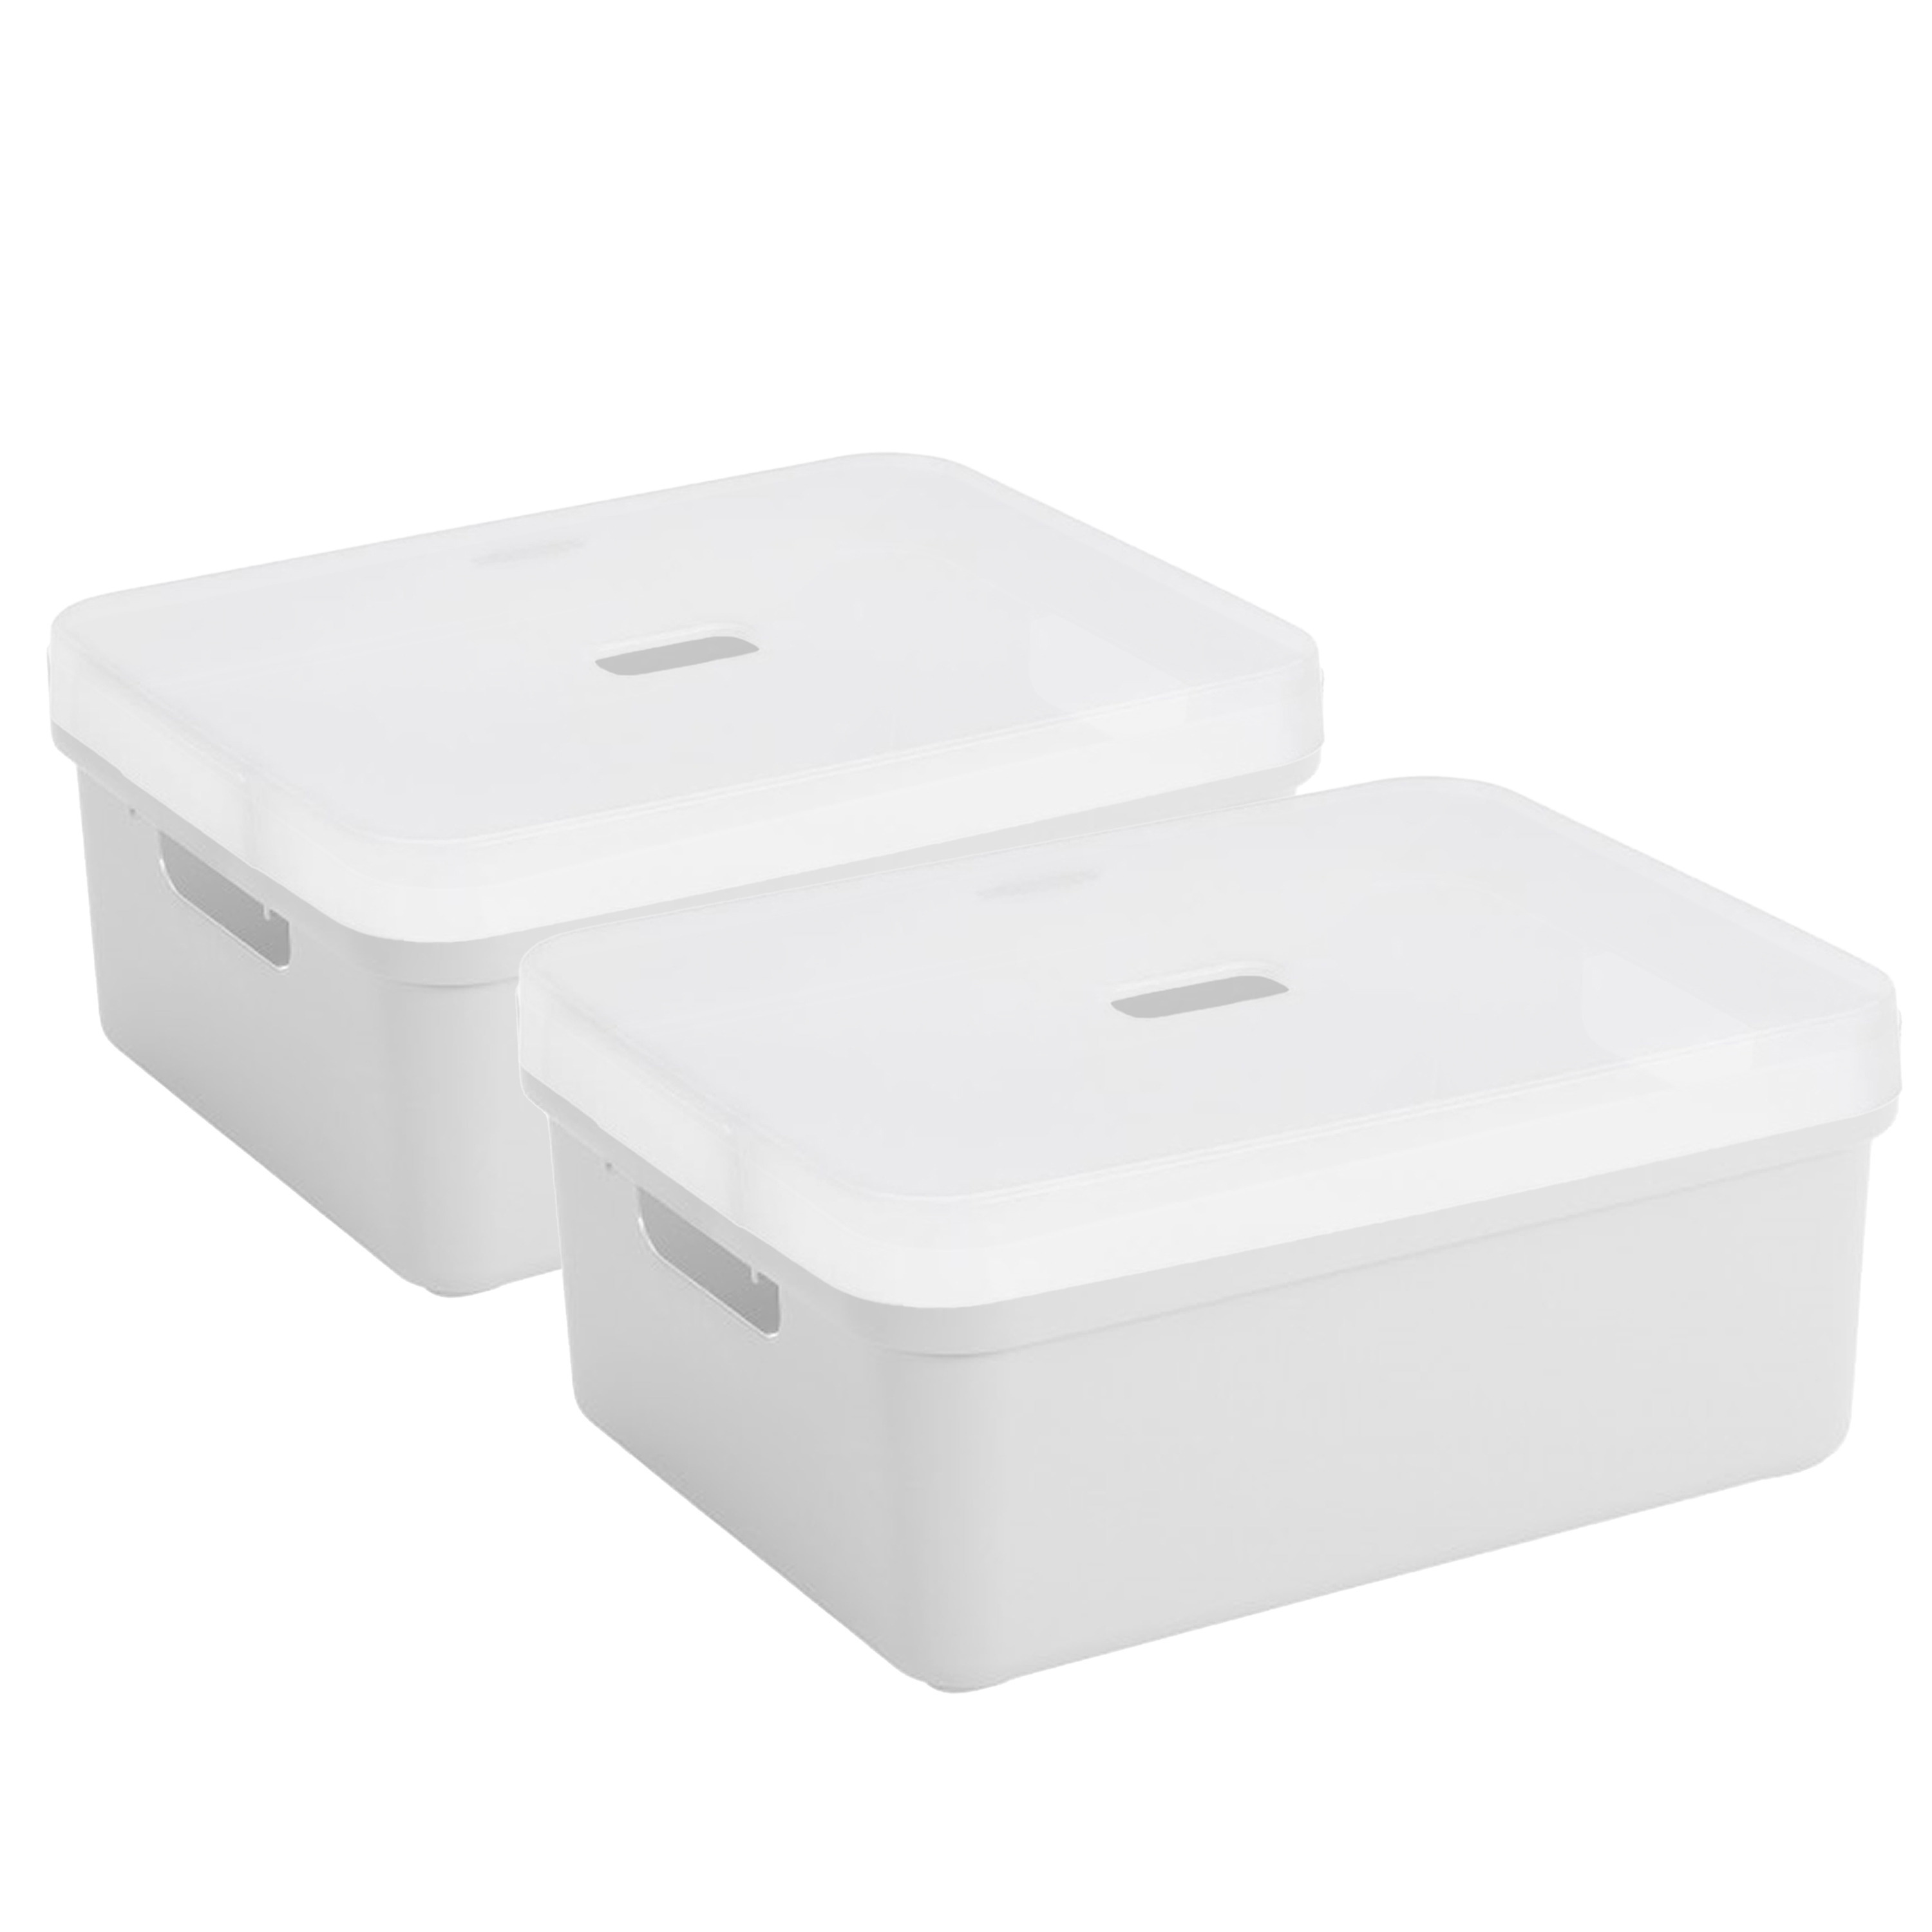 2x Sunware opbergbox-mand 24 liter wit kunststof met transparante deksel